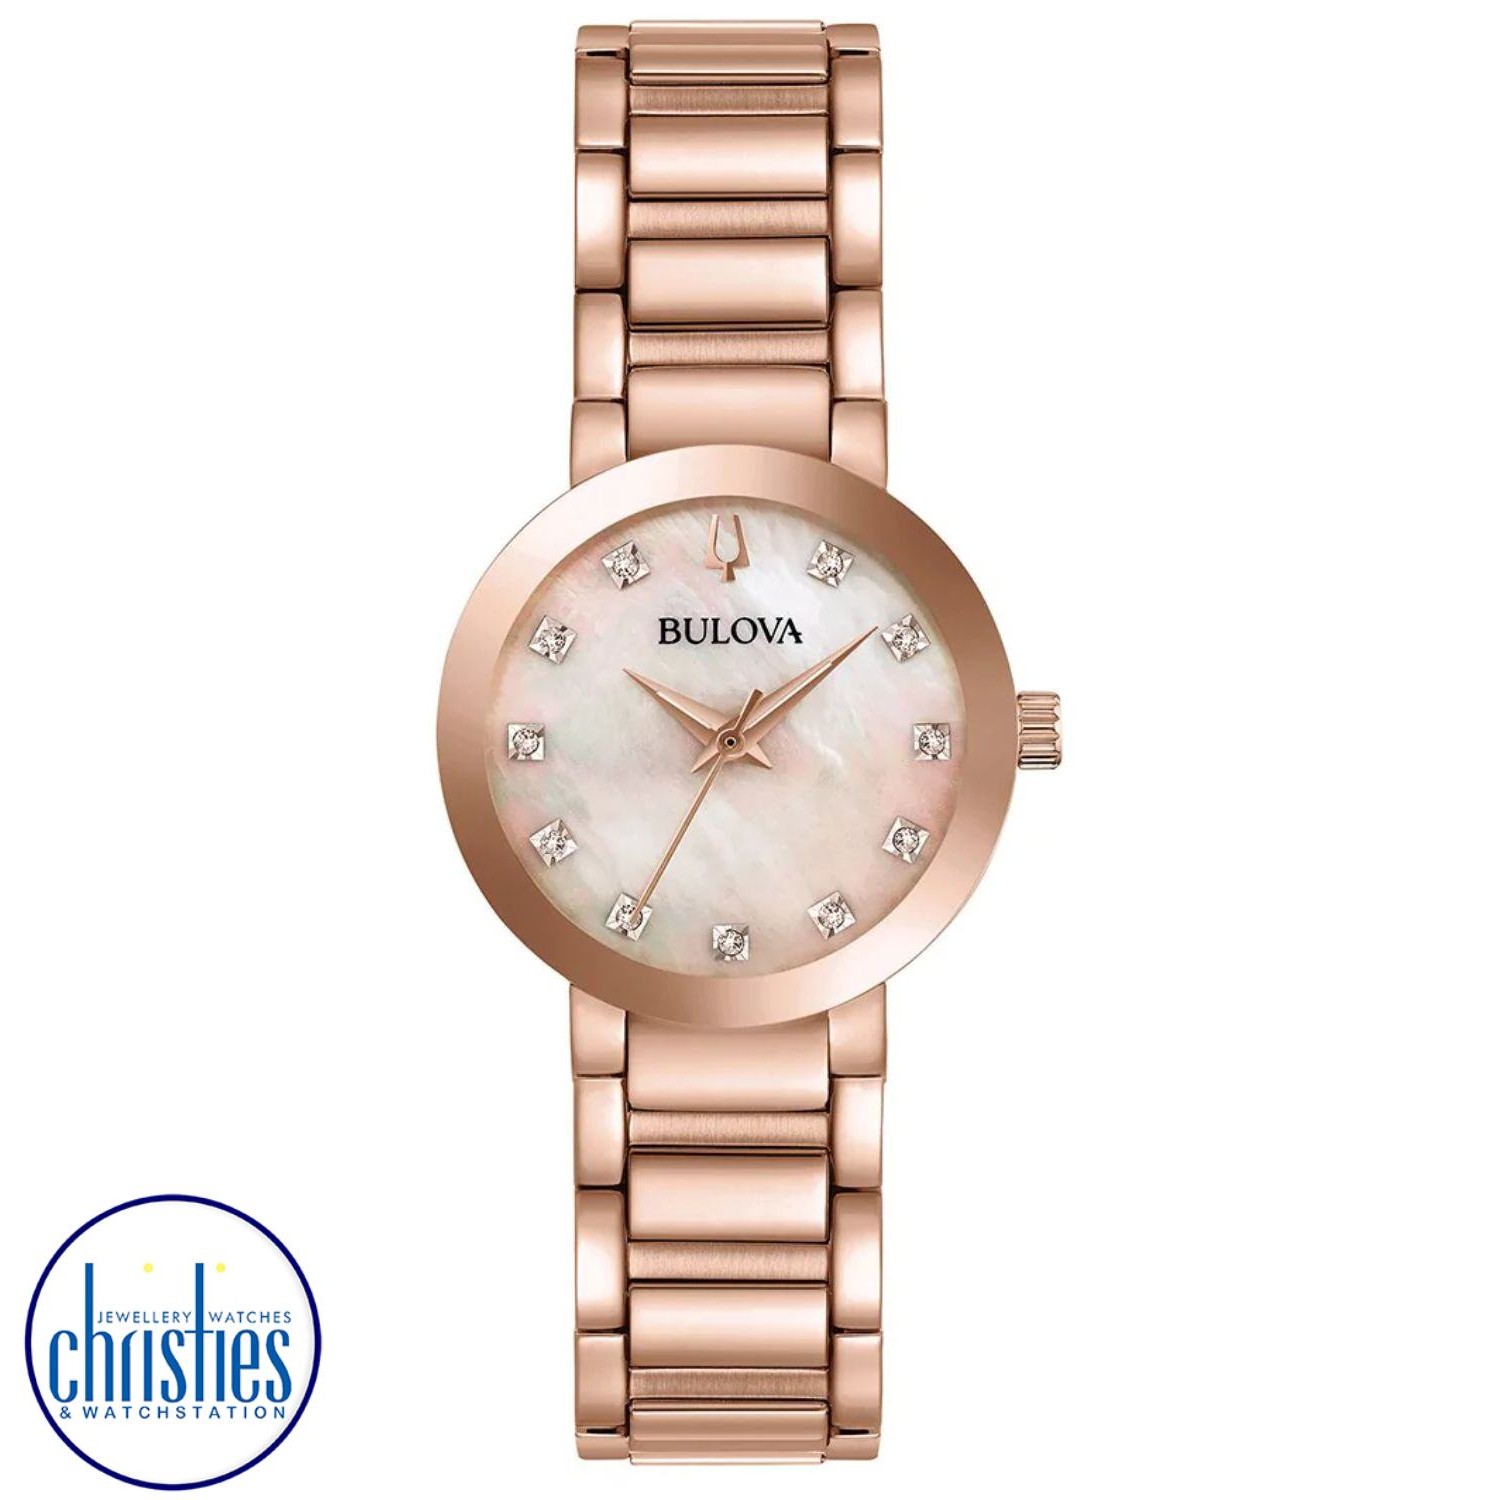 97P151 Bulova Women's Diamond Watch. Experience luxury and elegance with the Bulova 97P151.